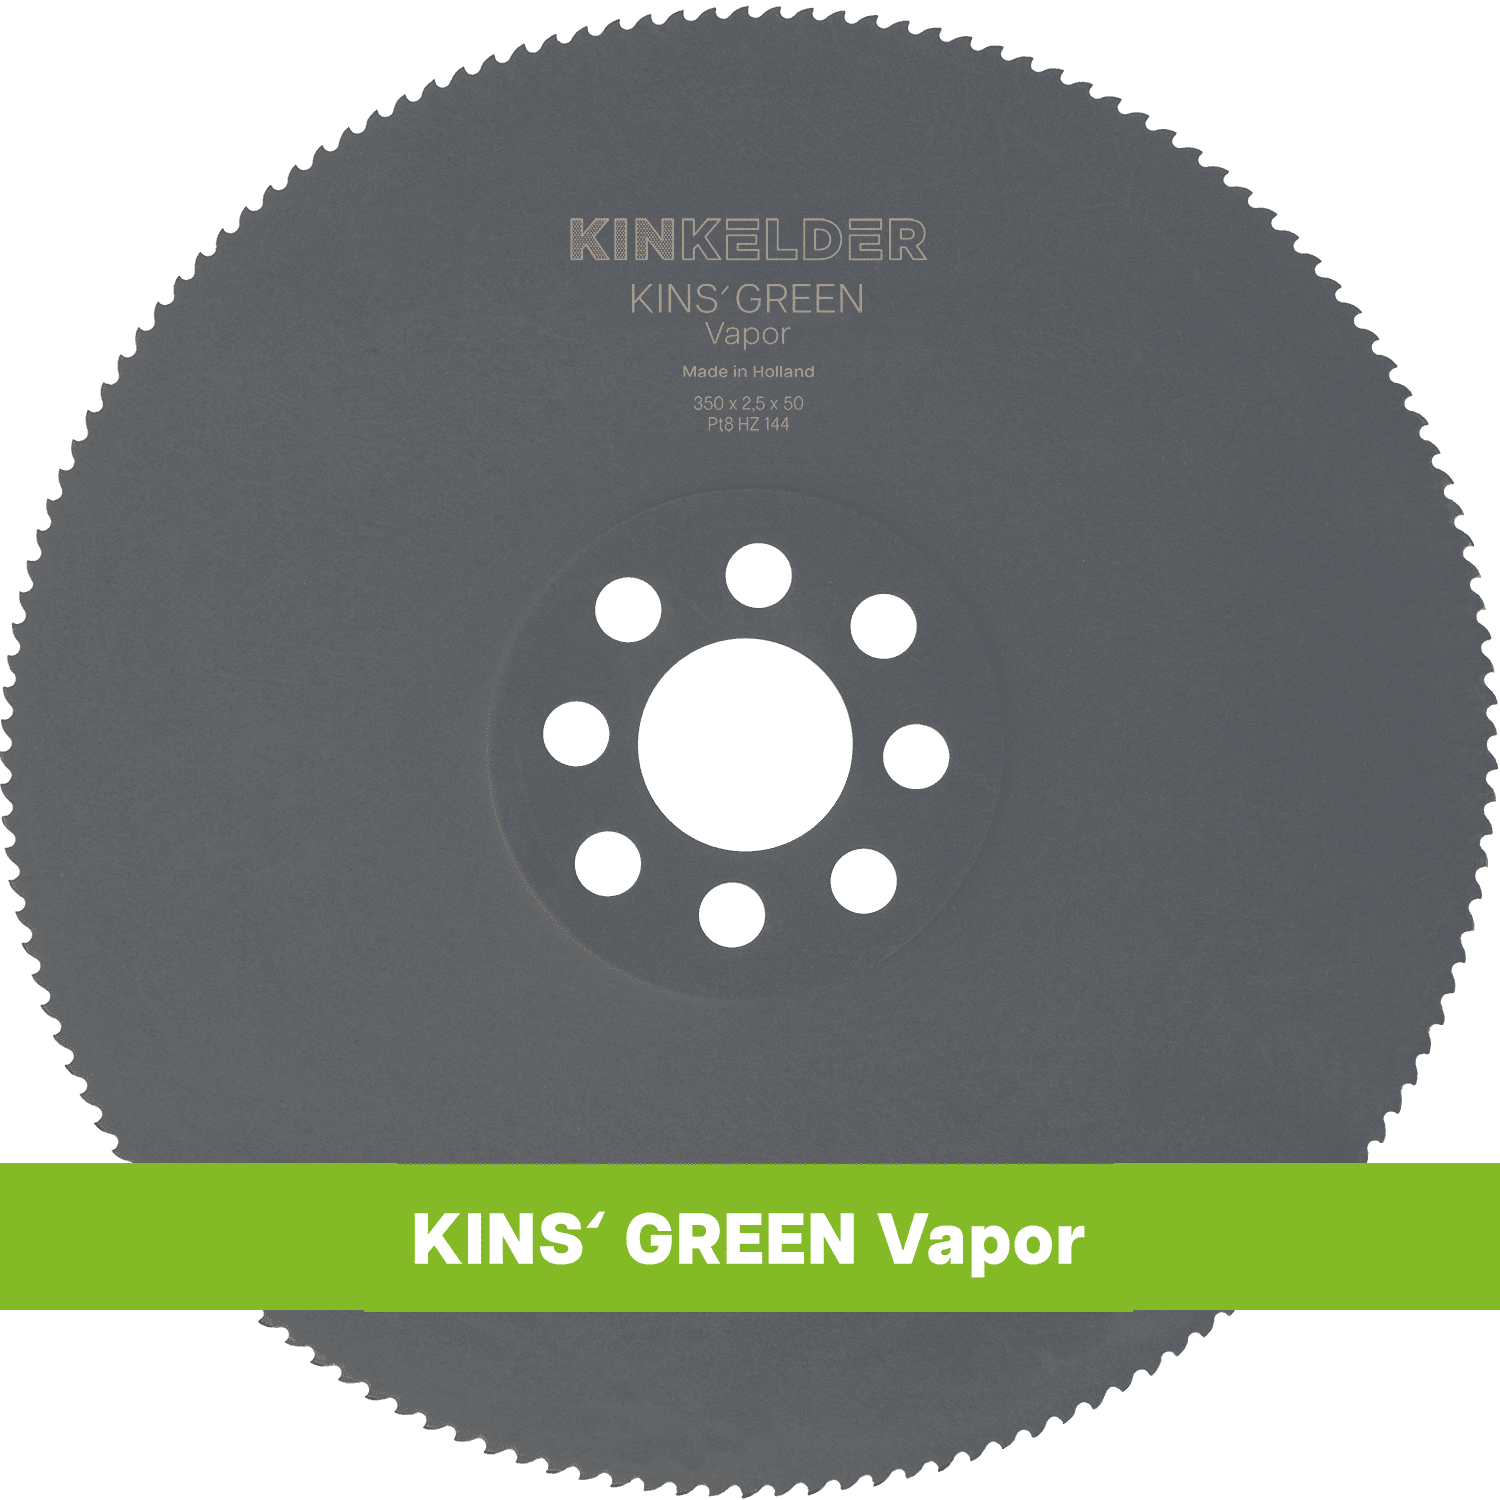 KINS' GREEN Vapor